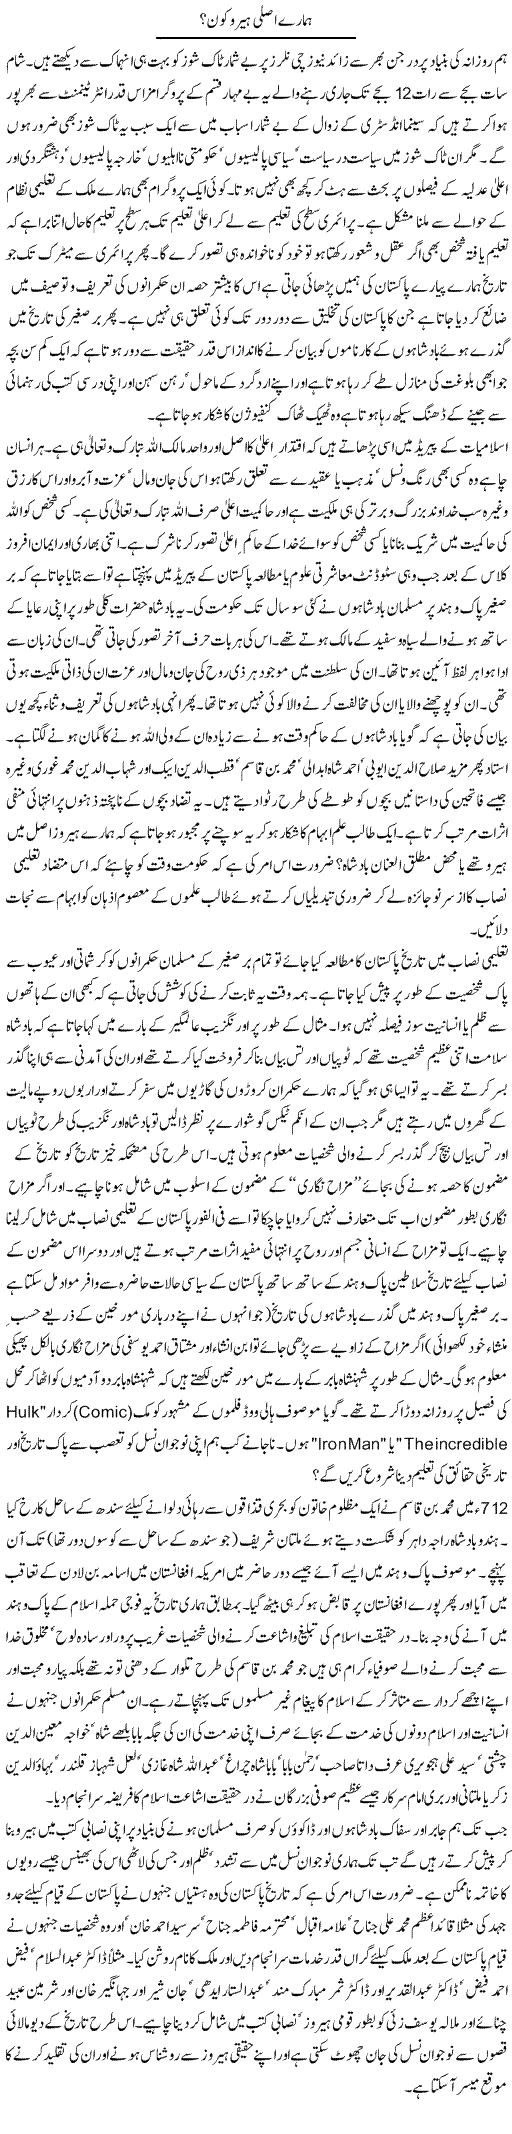 Hamare Asli Hero Kon? | Syed Zeeshan Haider | Daily Urdu Columns